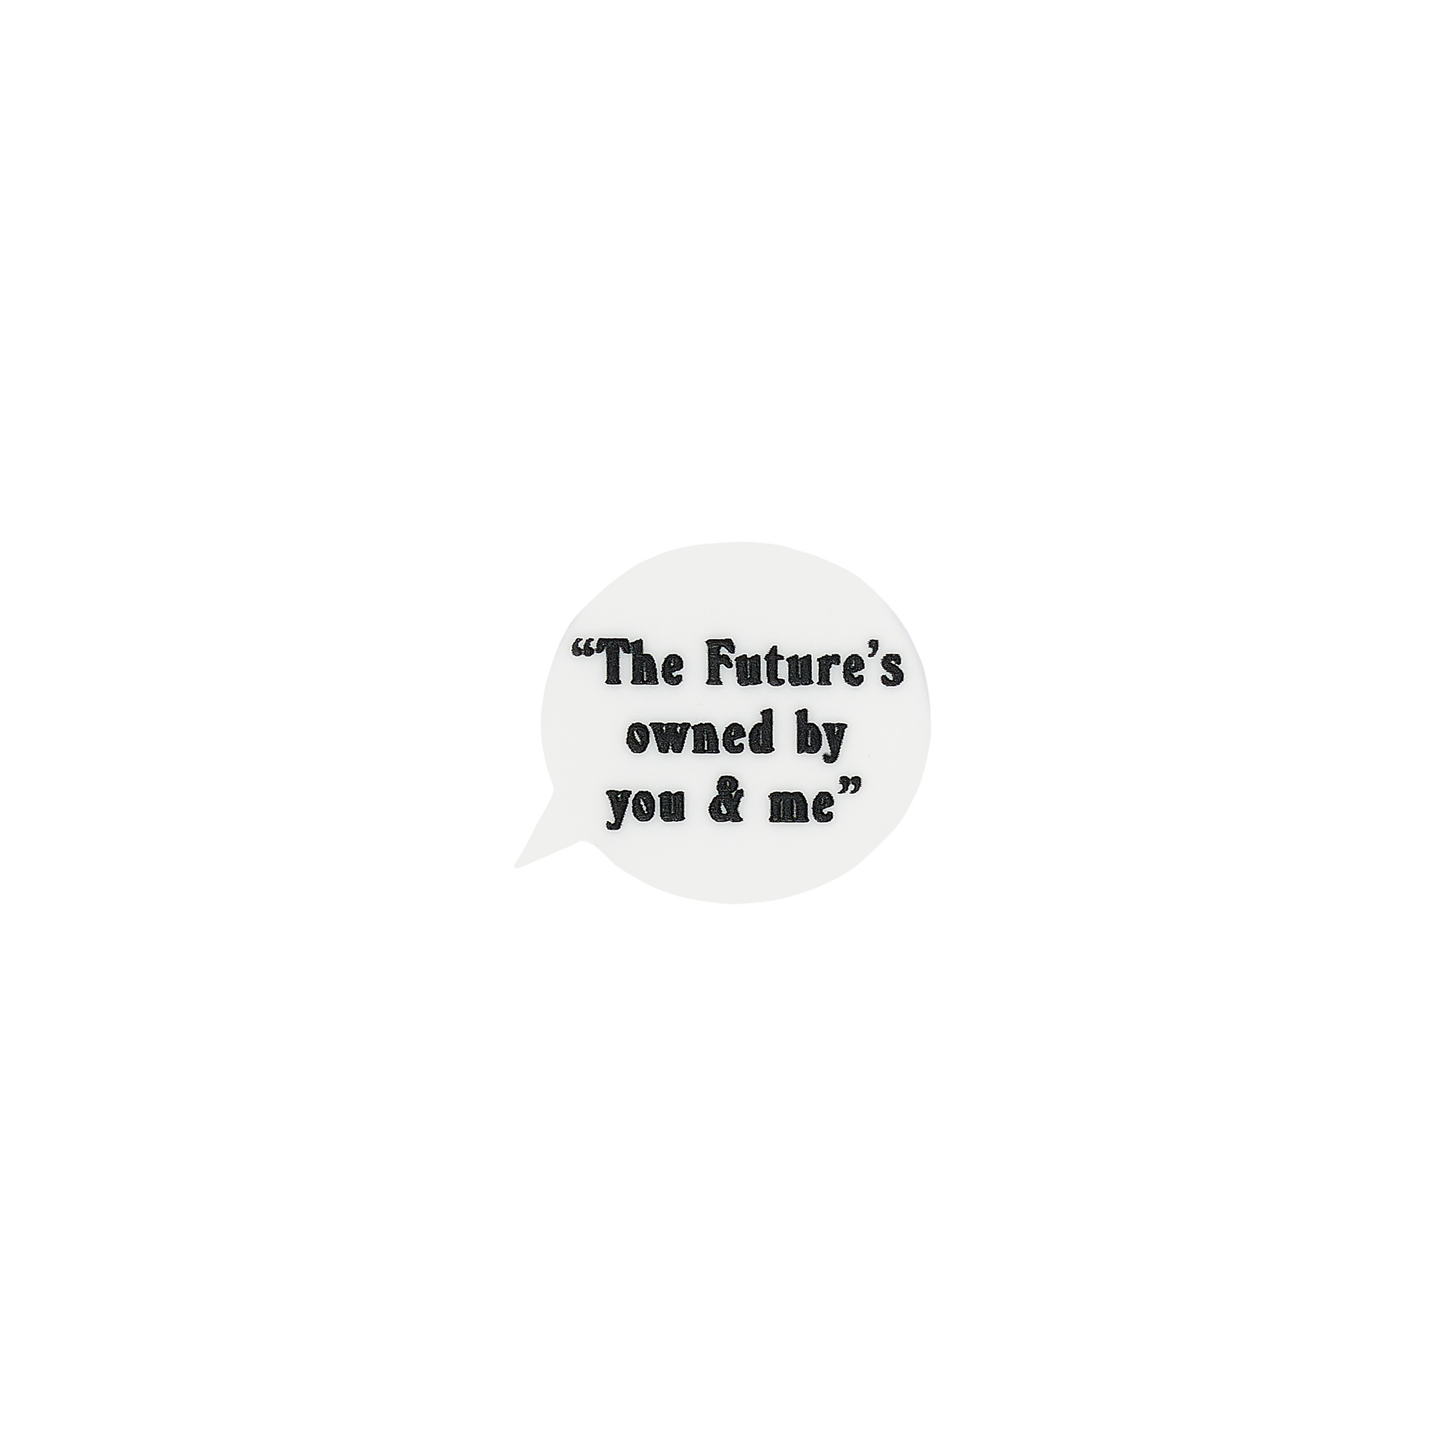 Tatty Devine x Pulp Speech Bubble Brooch - The Future’s Owned